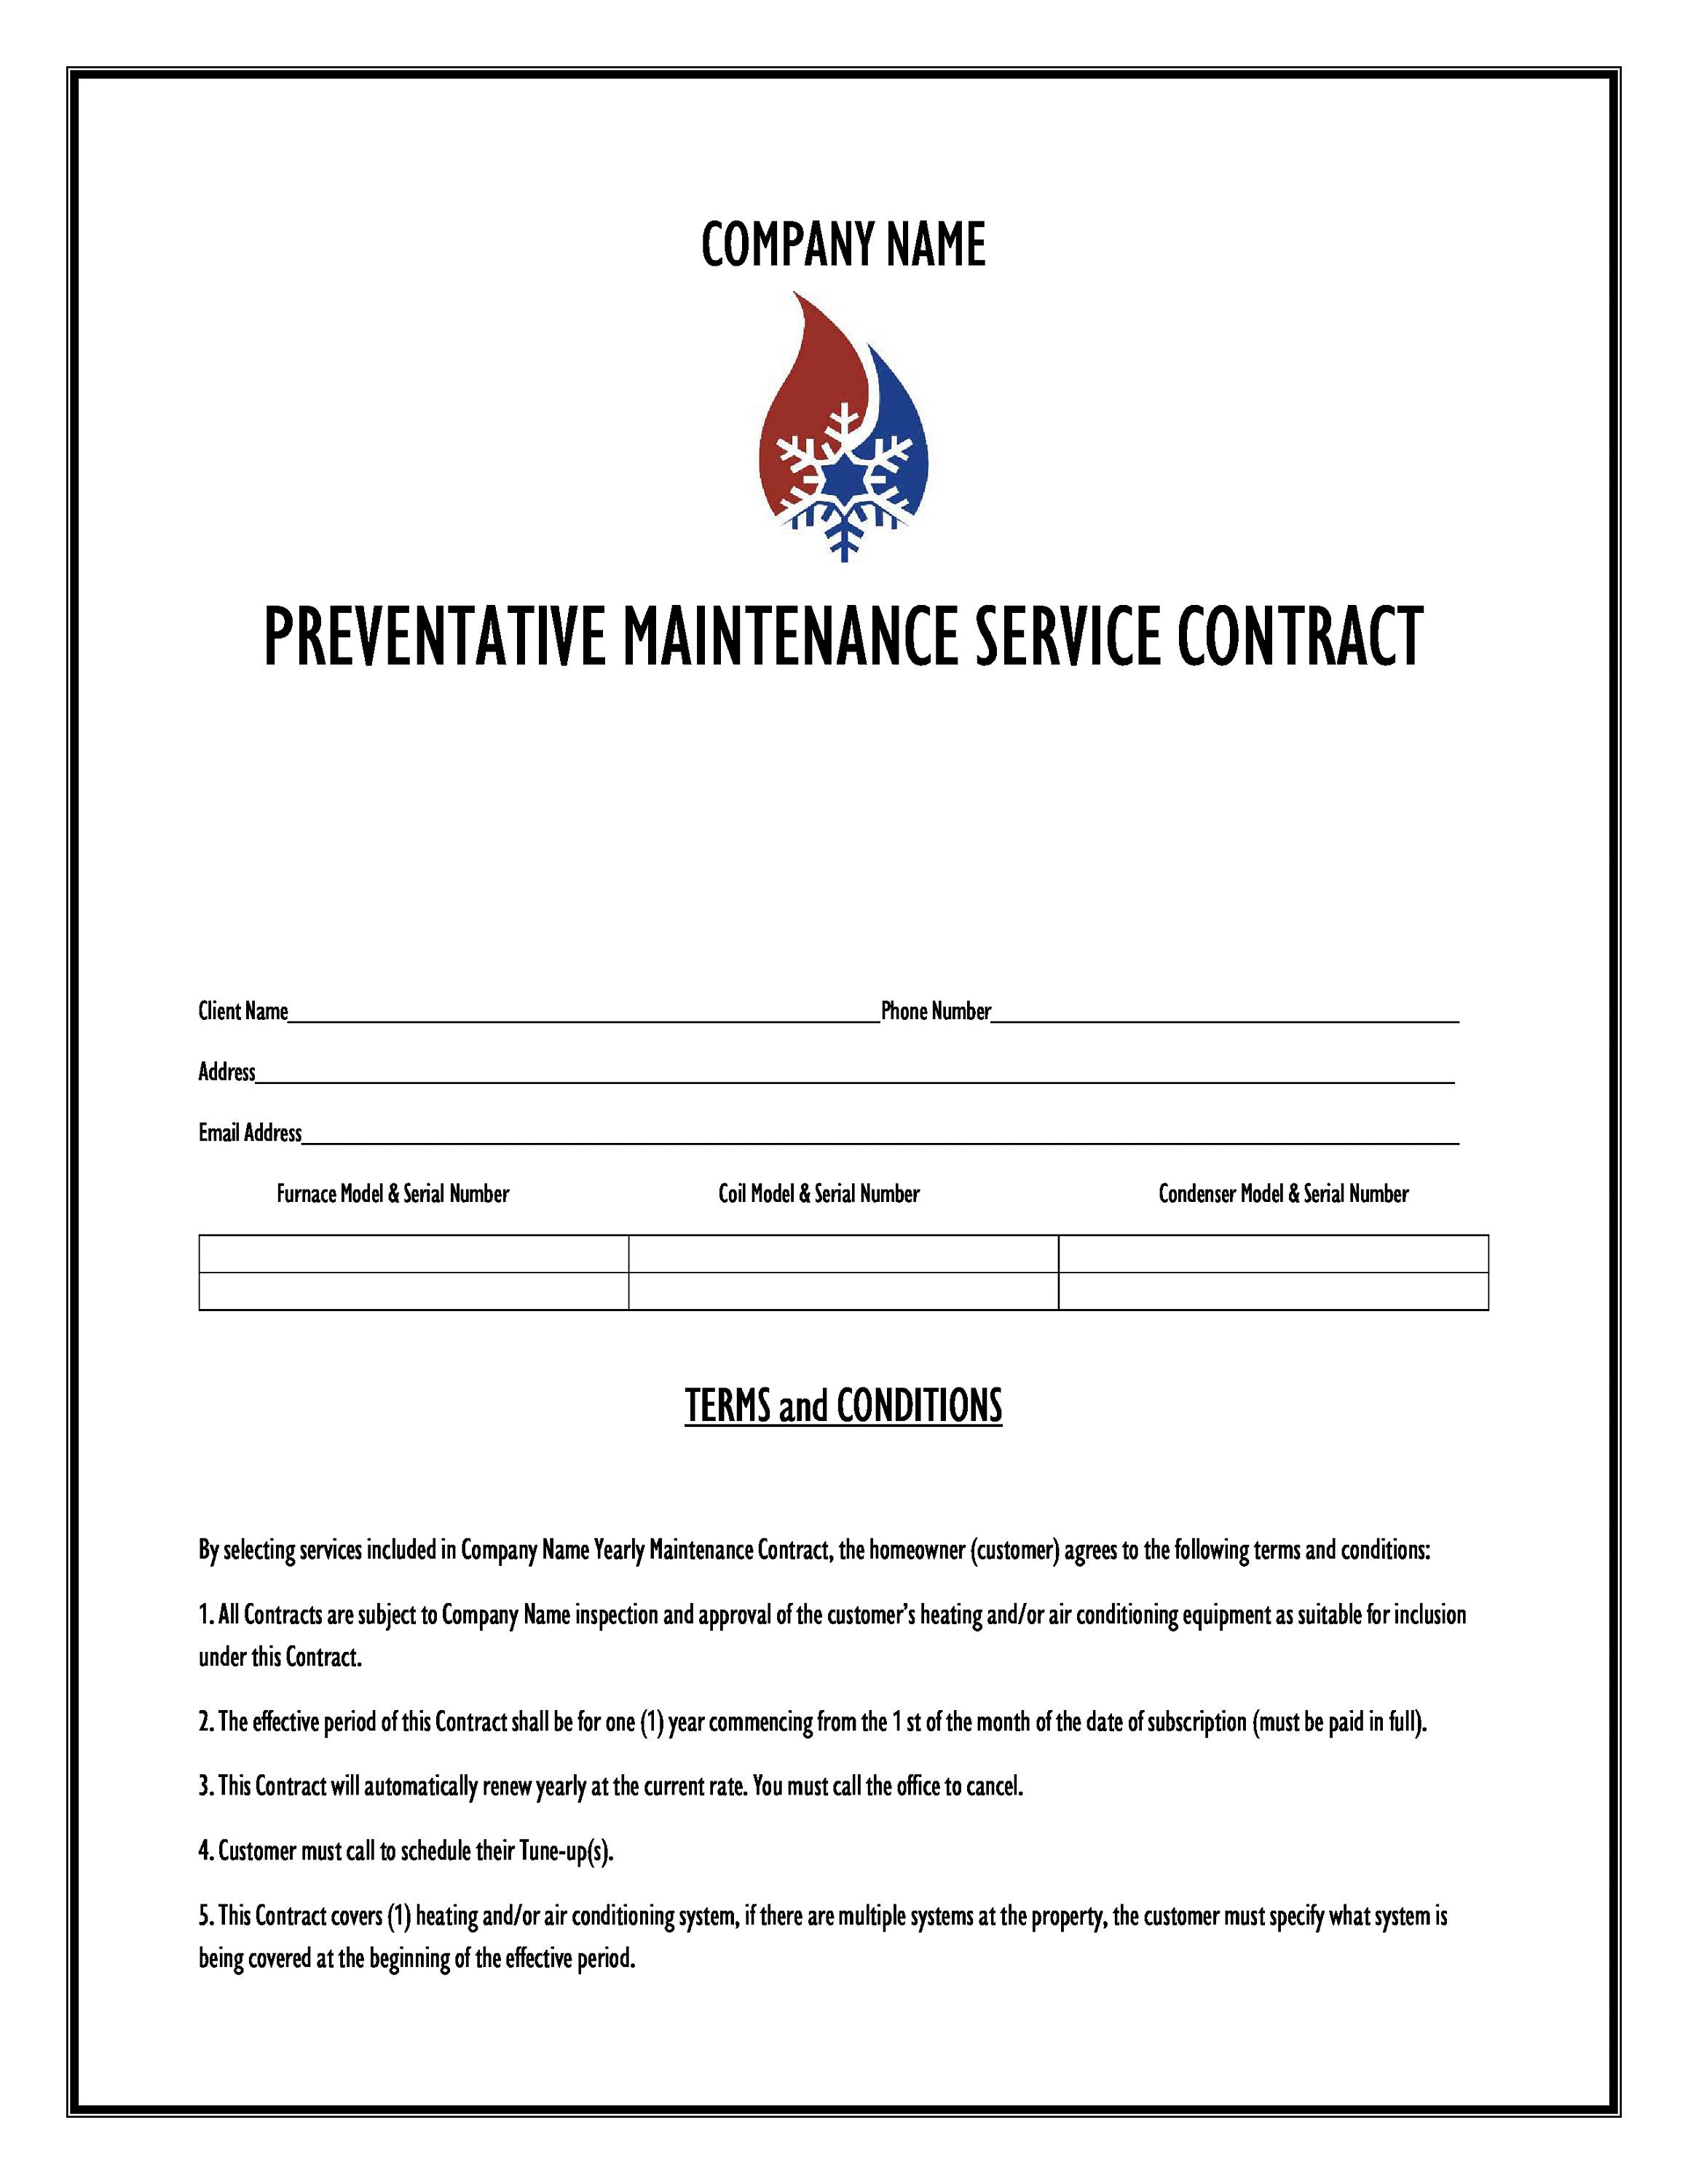 hvac-preventative-maintenance-contract-template-service